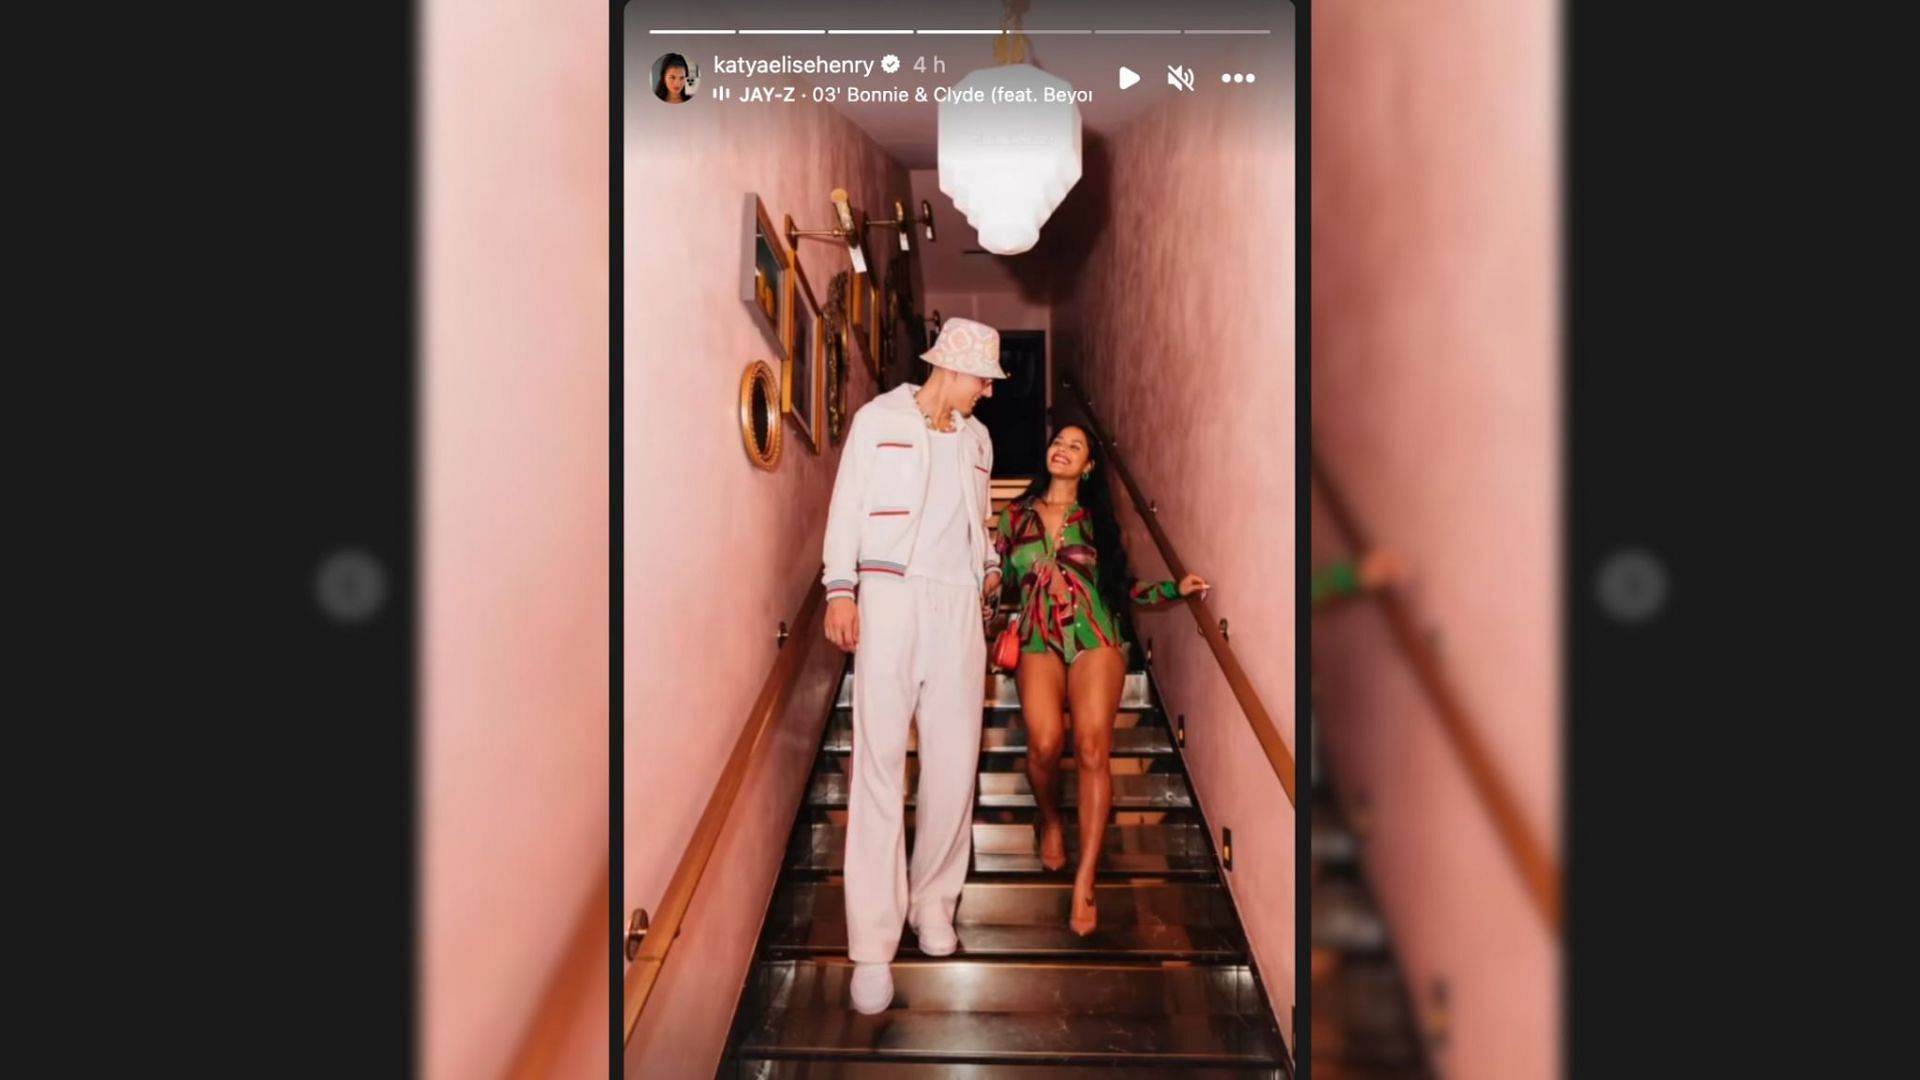 Katya Elise Henry posts a photo of herself and her boyfriend, Miami Heat guard Tyler Herroption